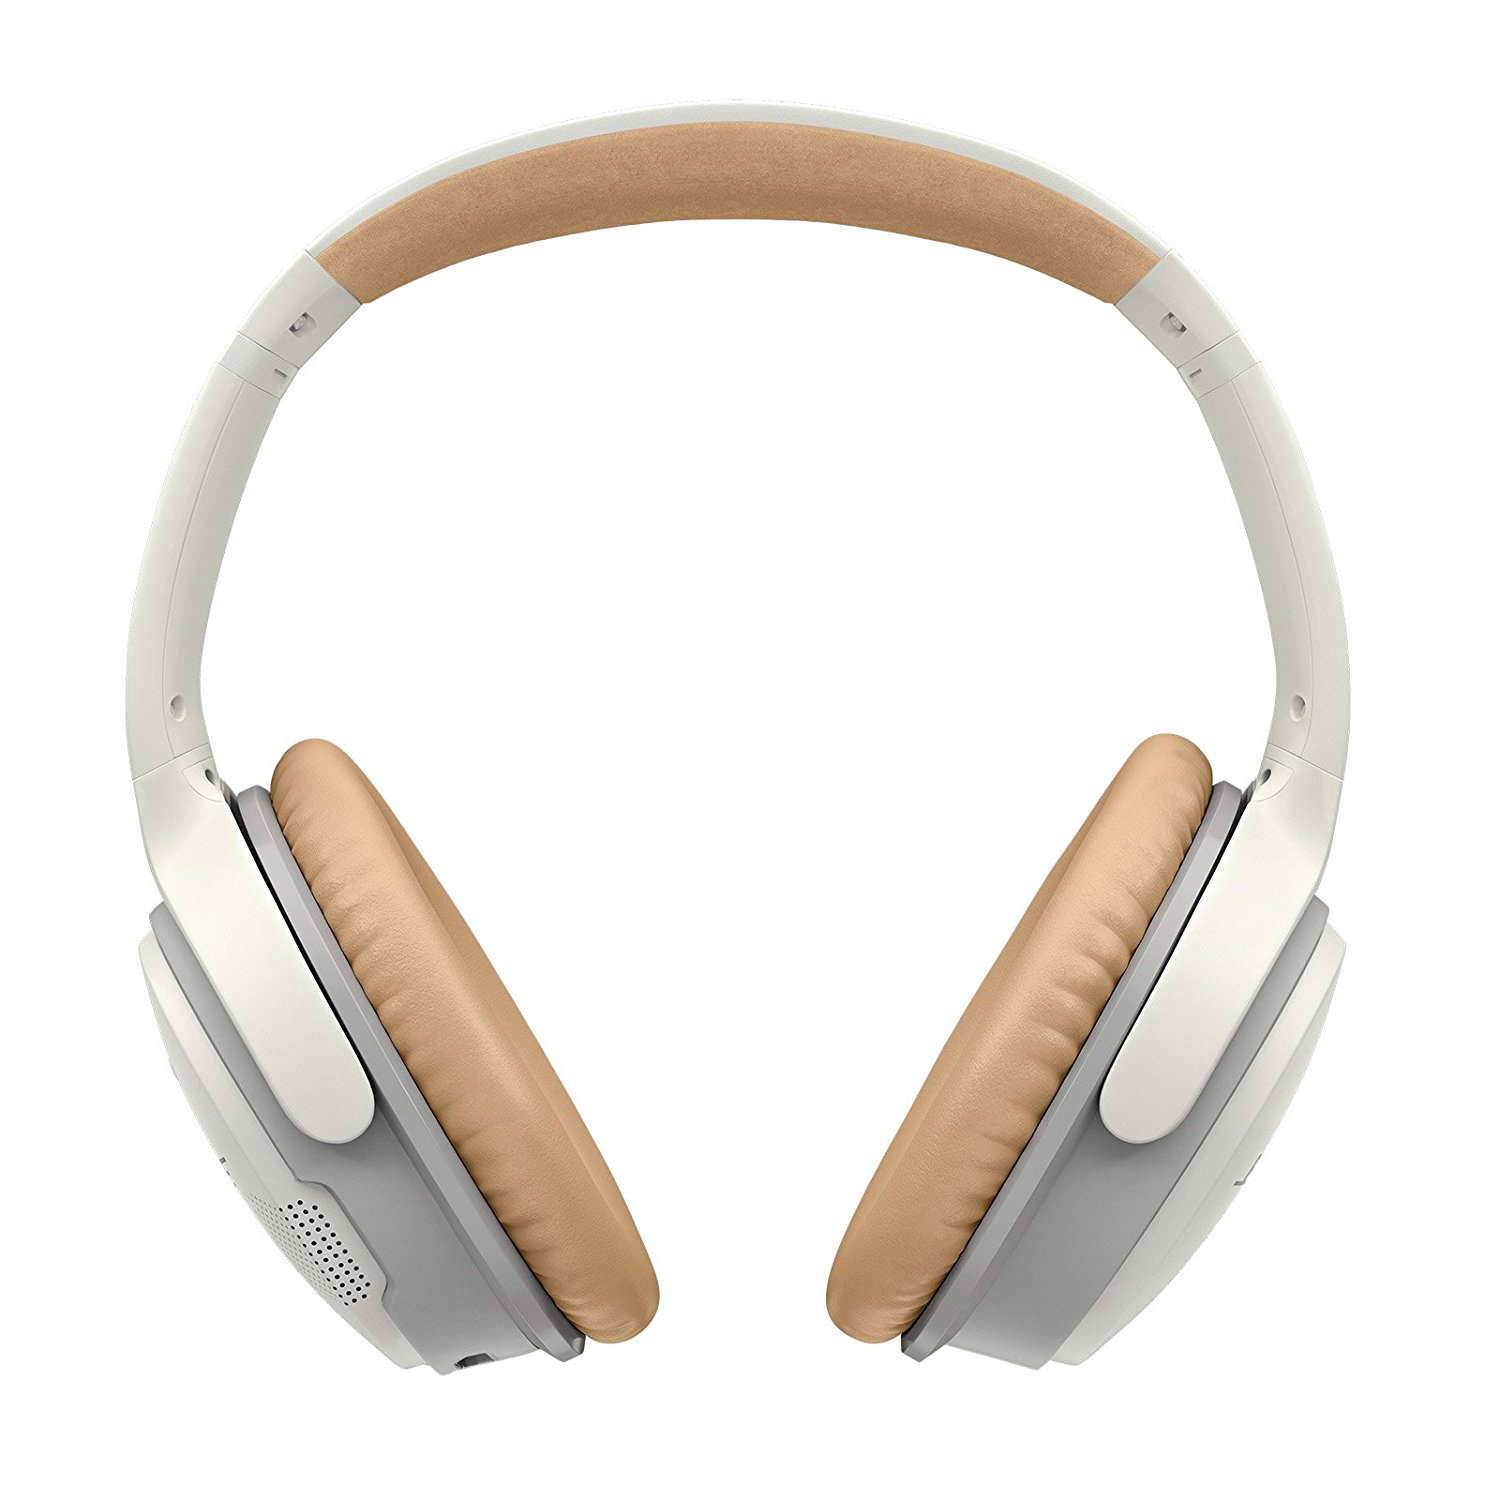 Amazon.com: Bose SoundLink around-ear wireless headphones II- White ...